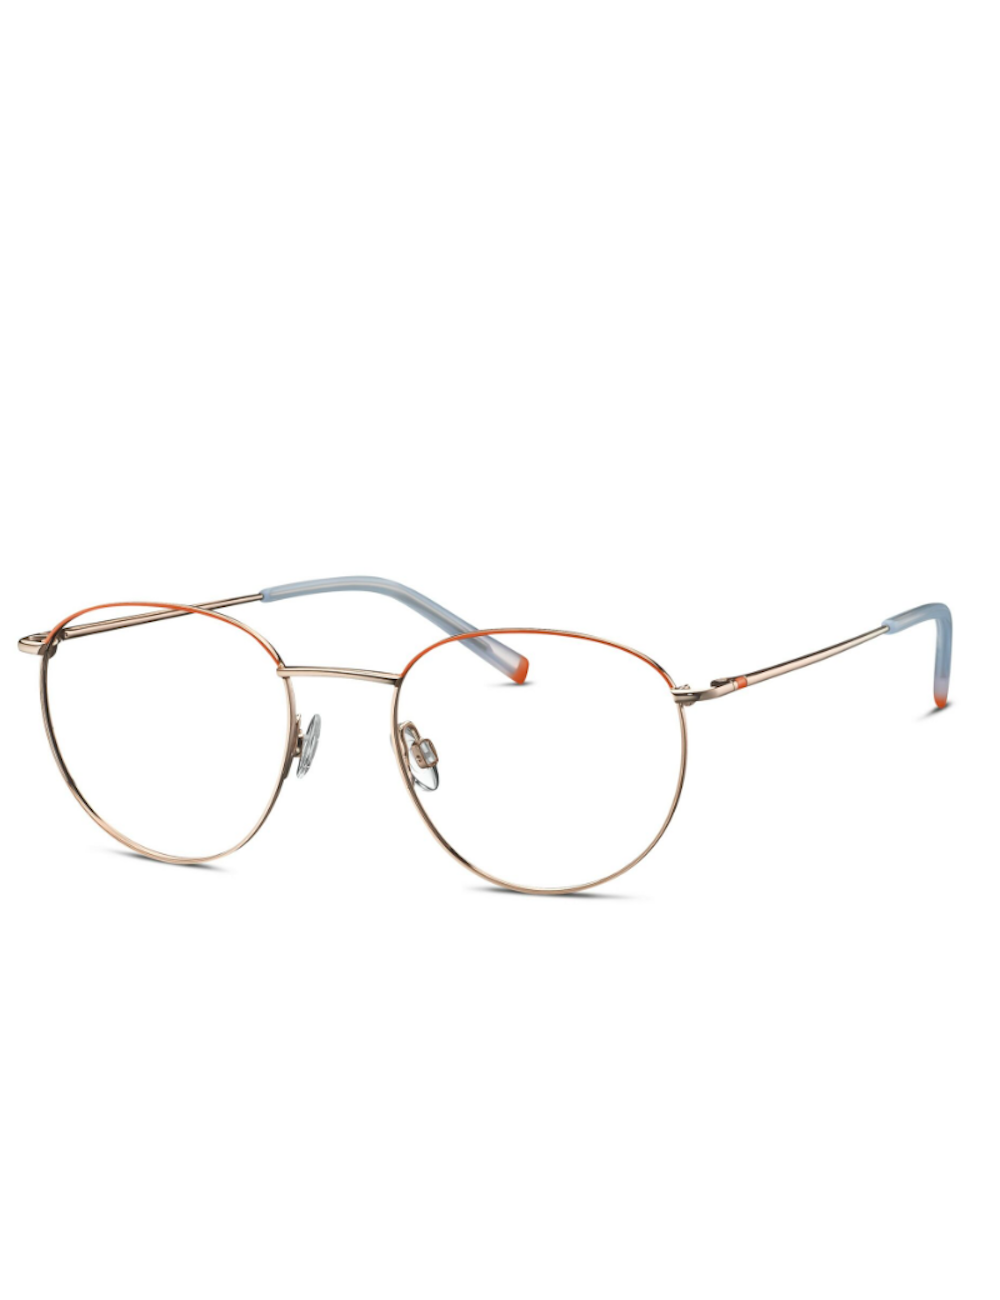 Humphrey's eyewear 582327 28 occhiali da vista pantos in metallo